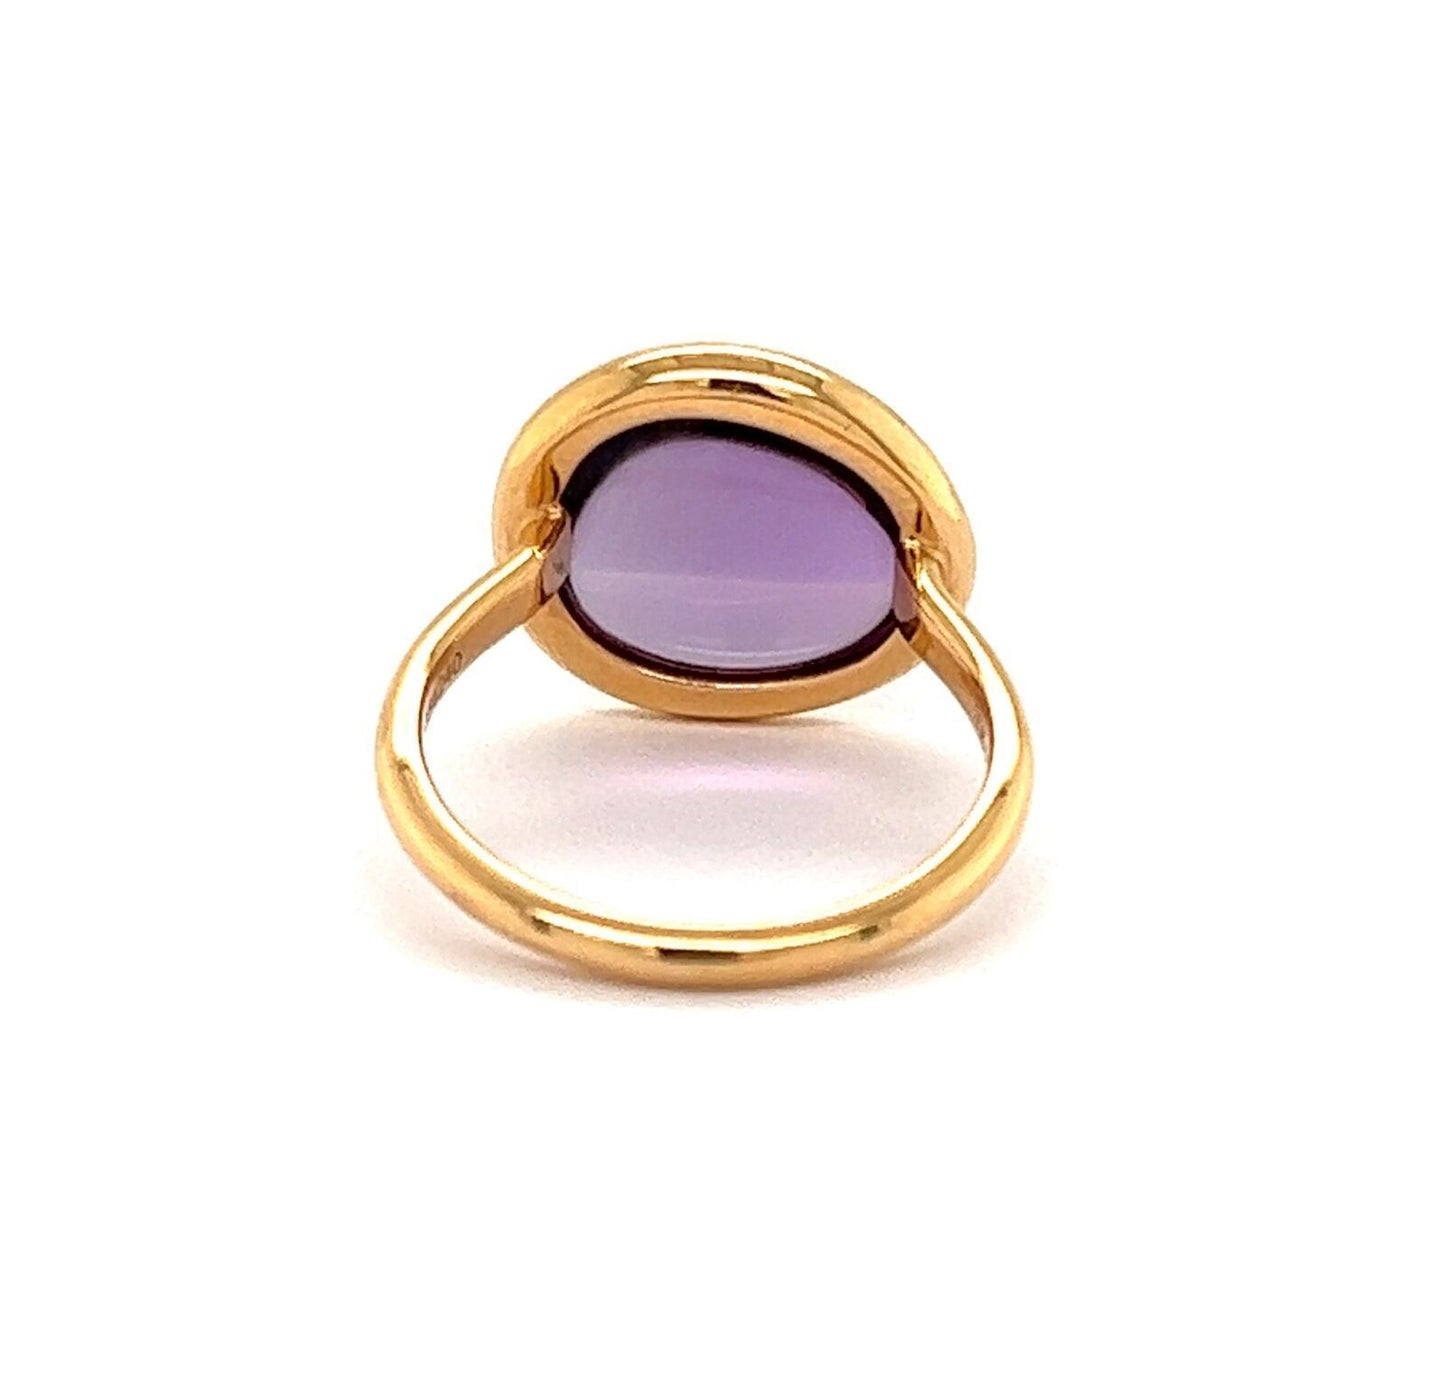 Fred of Paris Belles Rives Amethyst 18k Rose Gold Ring - Size 6.5